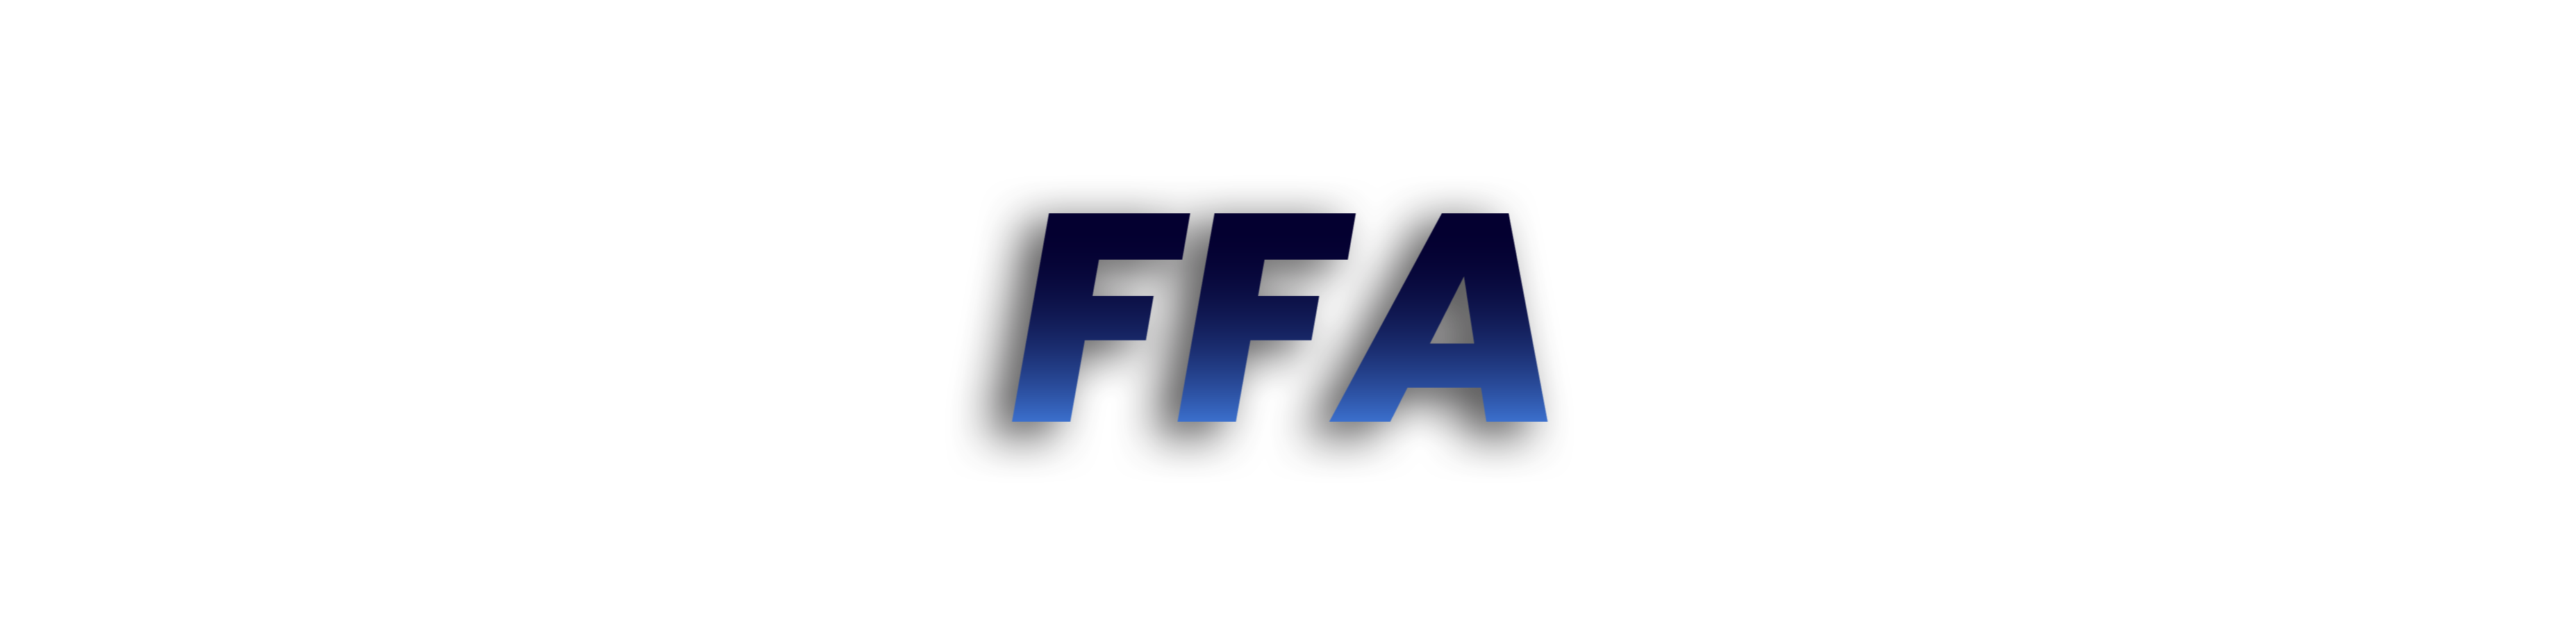 FFA Graphic Headline